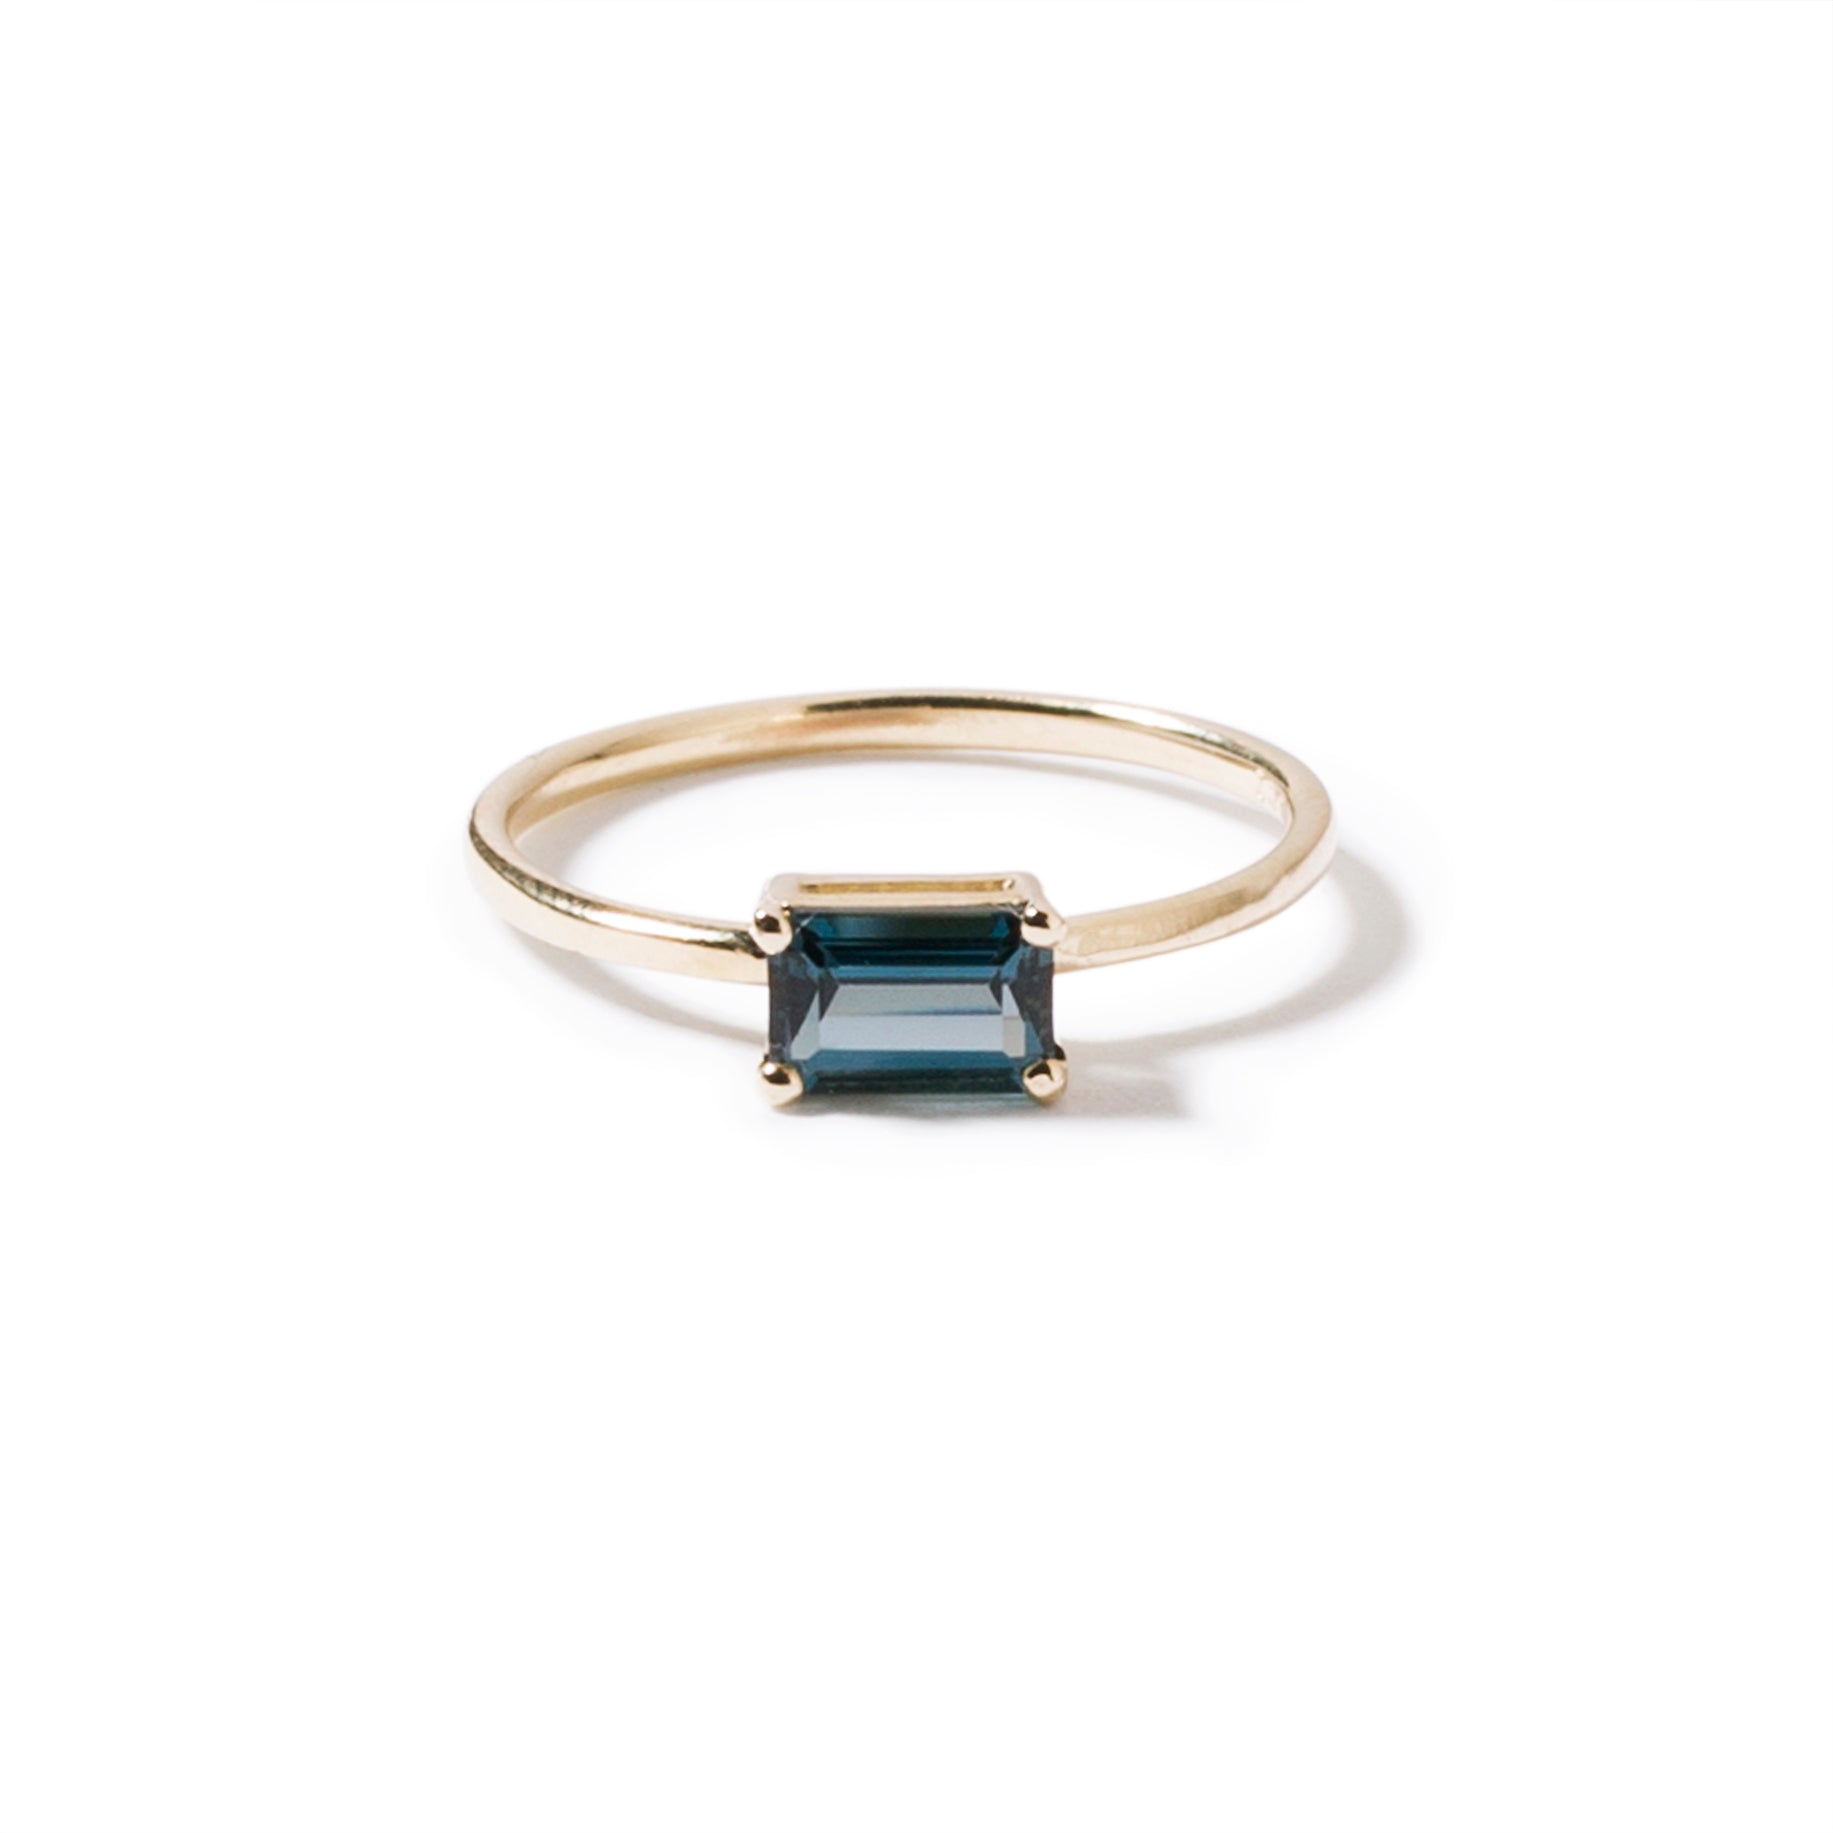 9ct gold luxury emerald cut london blue topaz ring - horizontal